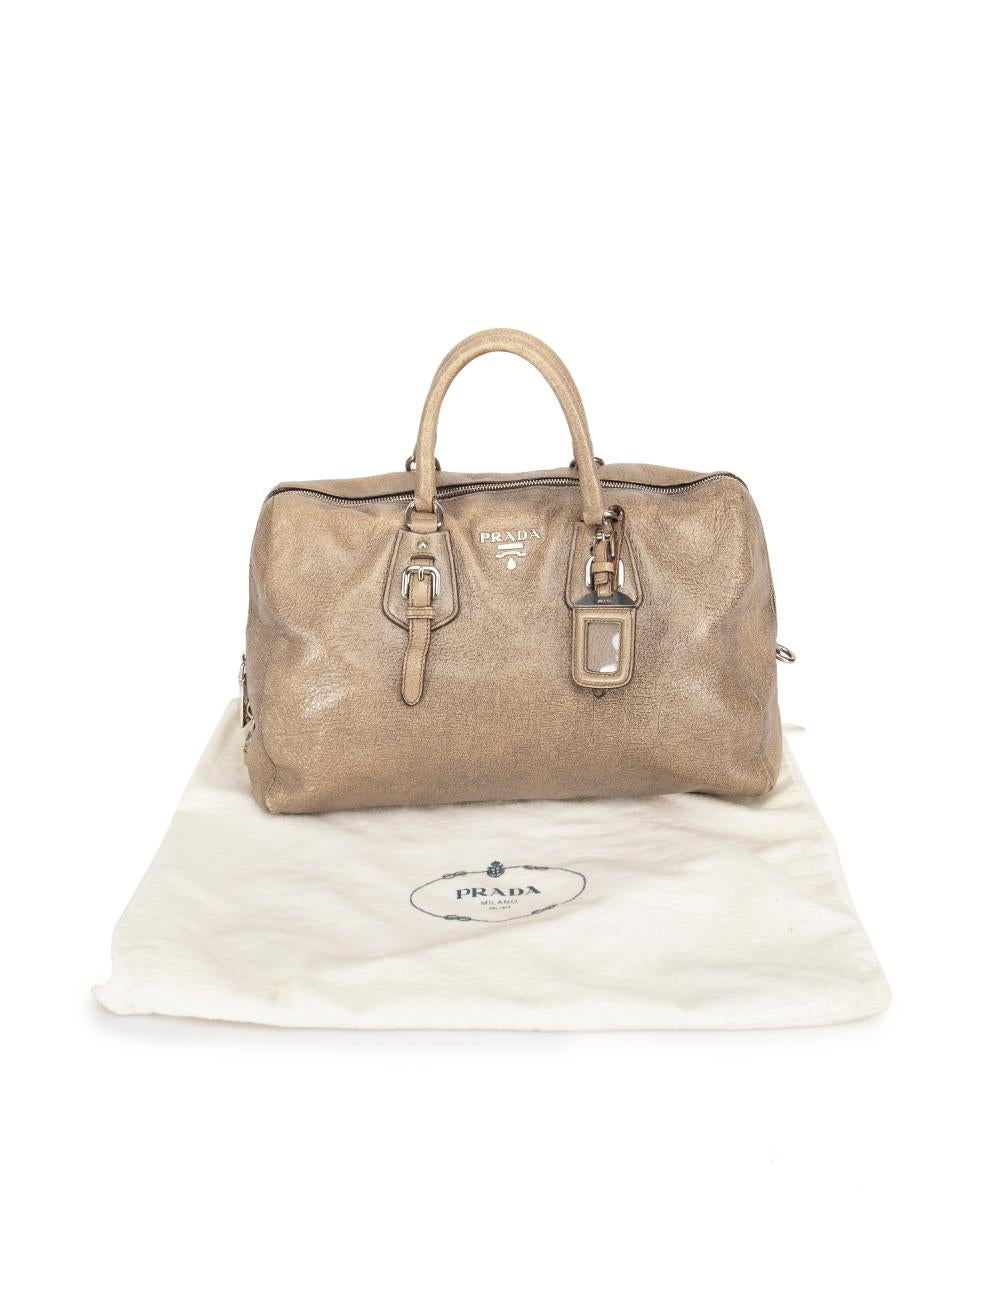 Prada Women's Taupe Deerskin Leather Cervo Lux Handbag For Sale 5